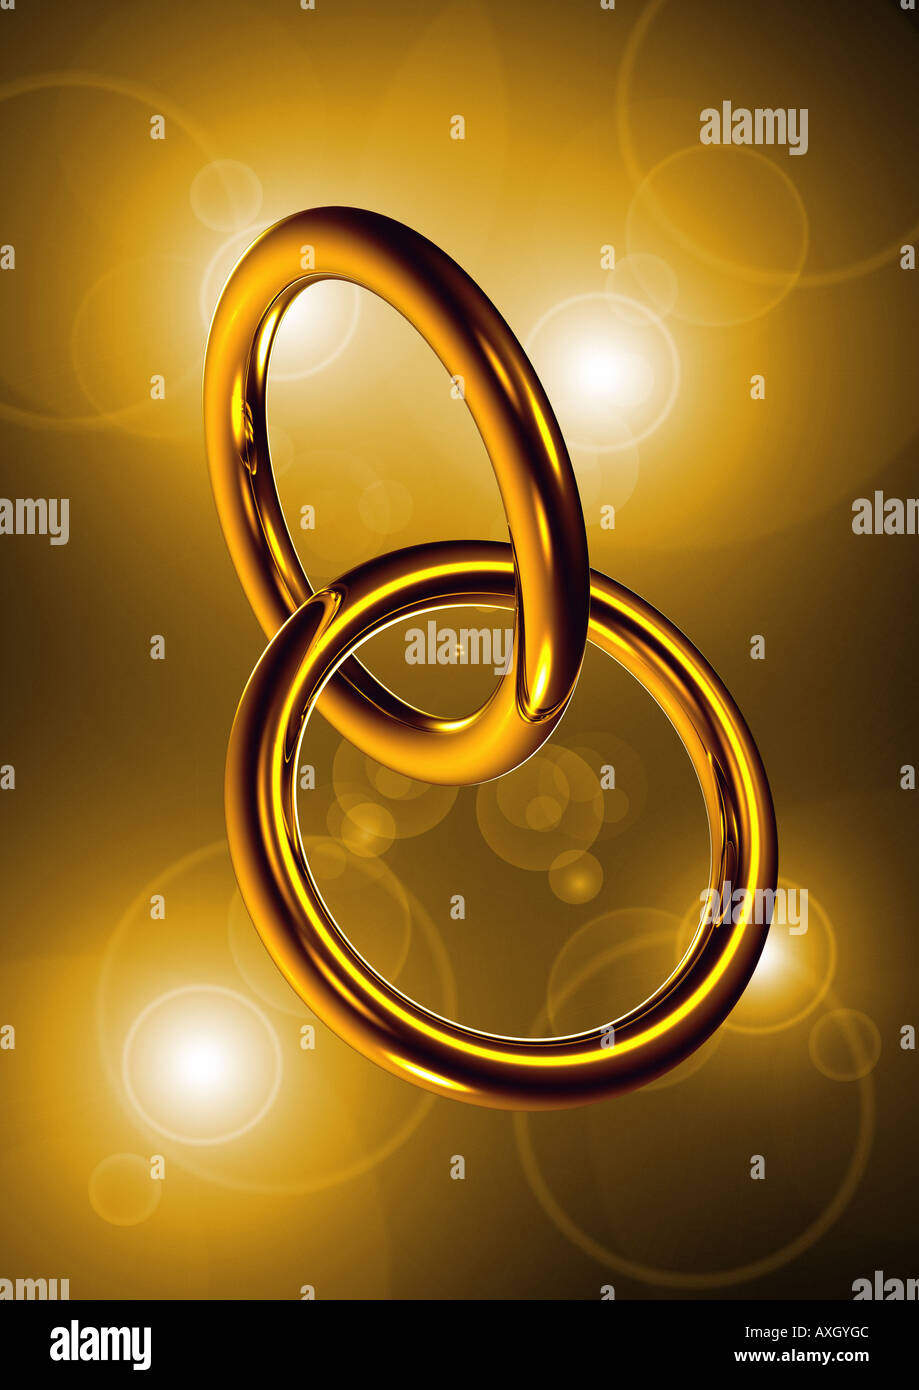 2 rings symbol for marriage fusion 2 Ringe ineinander verschränkt Symbol  für Fusion Heirat Stock Photo - Alamy